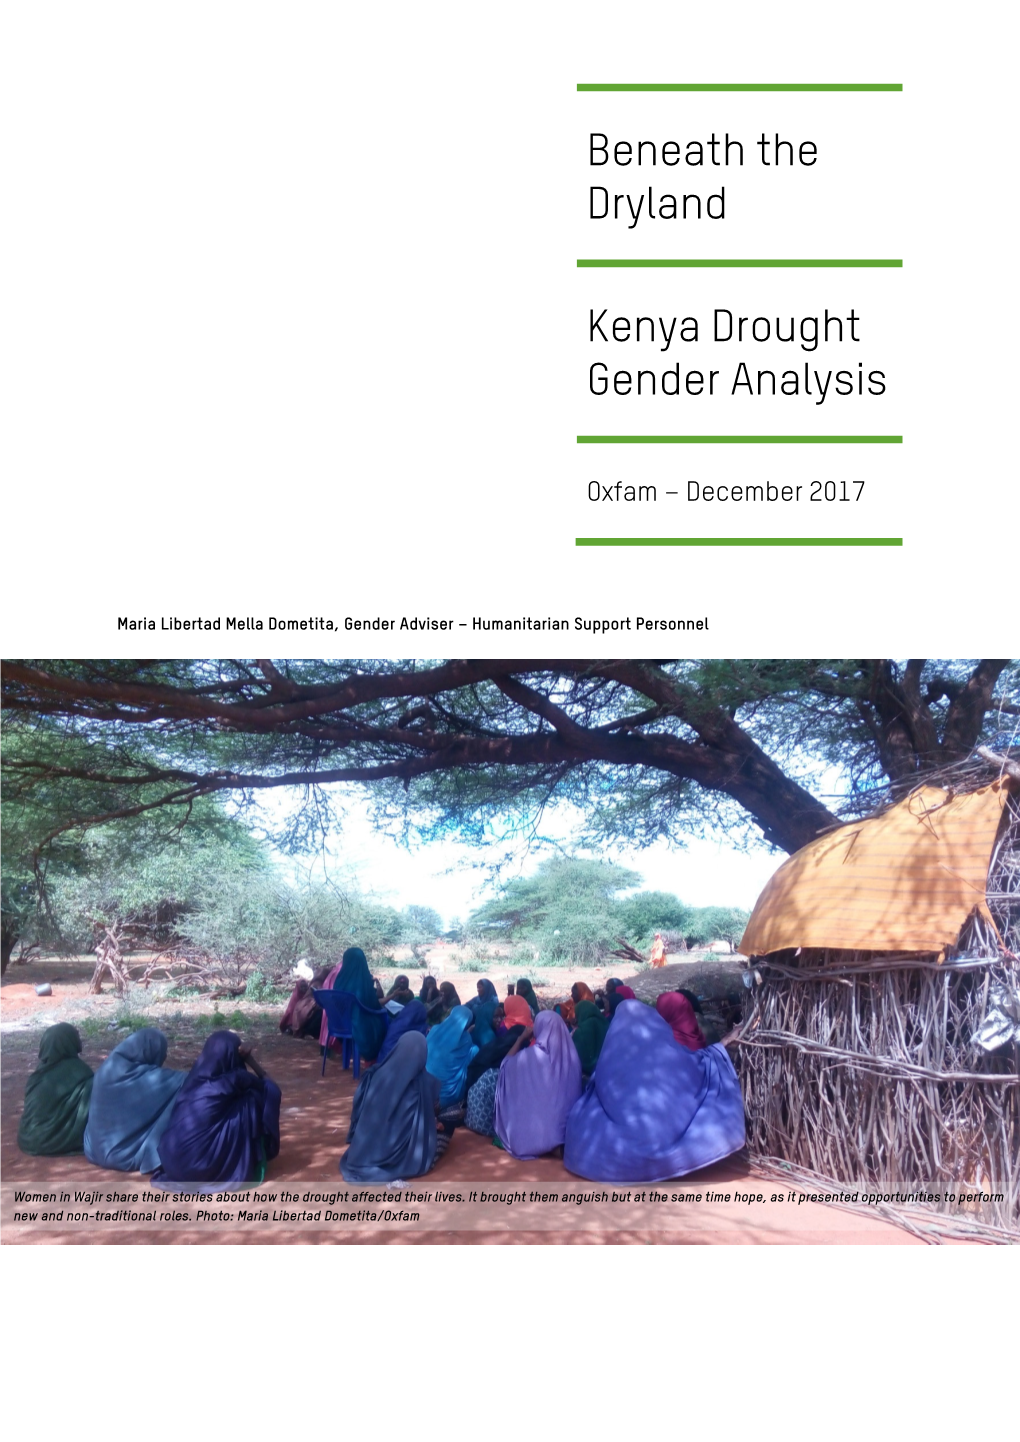 Beneath the Dryland: Kenya Drought Gender Analysis